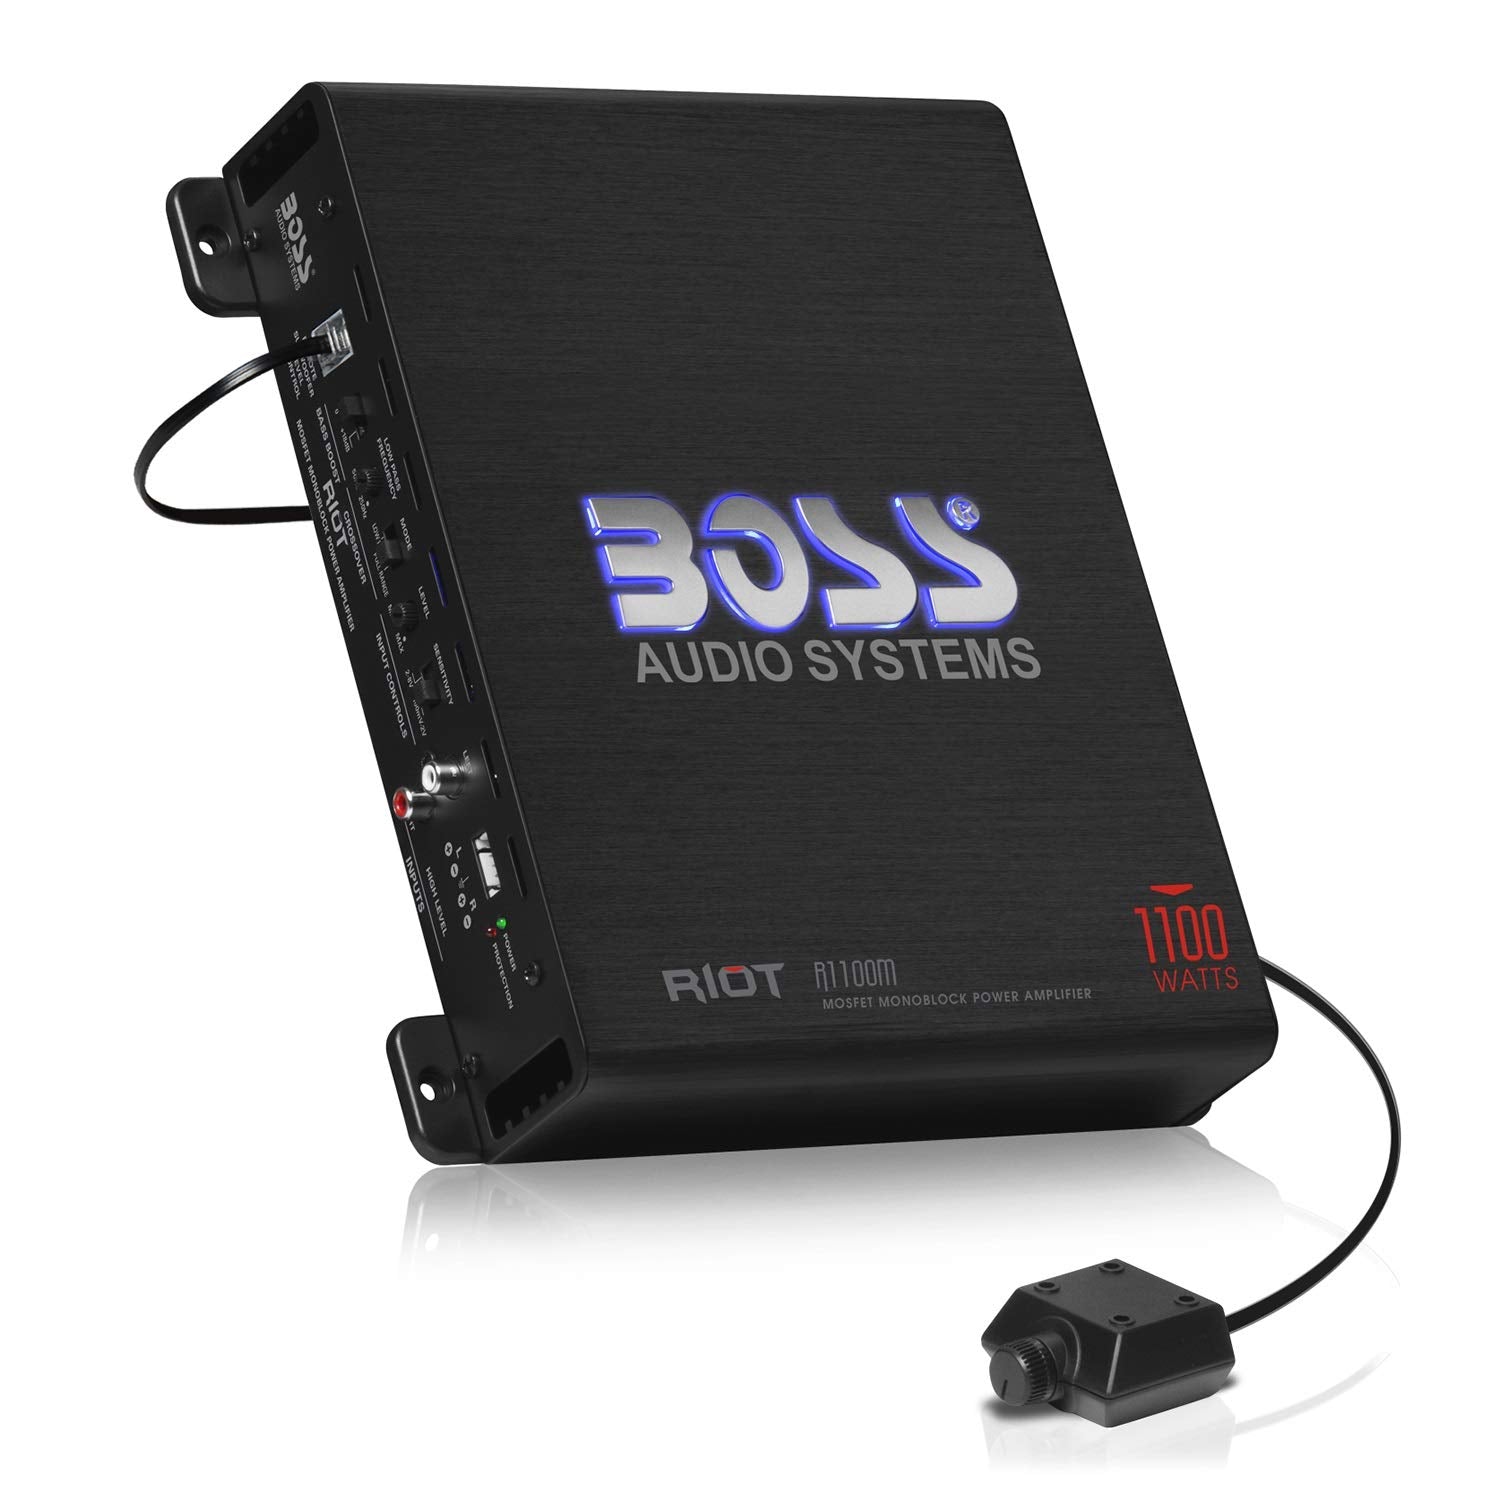 BOSS Audio Systems R1100M Monoblock Car Amplifier - 1100 Watts Max Power